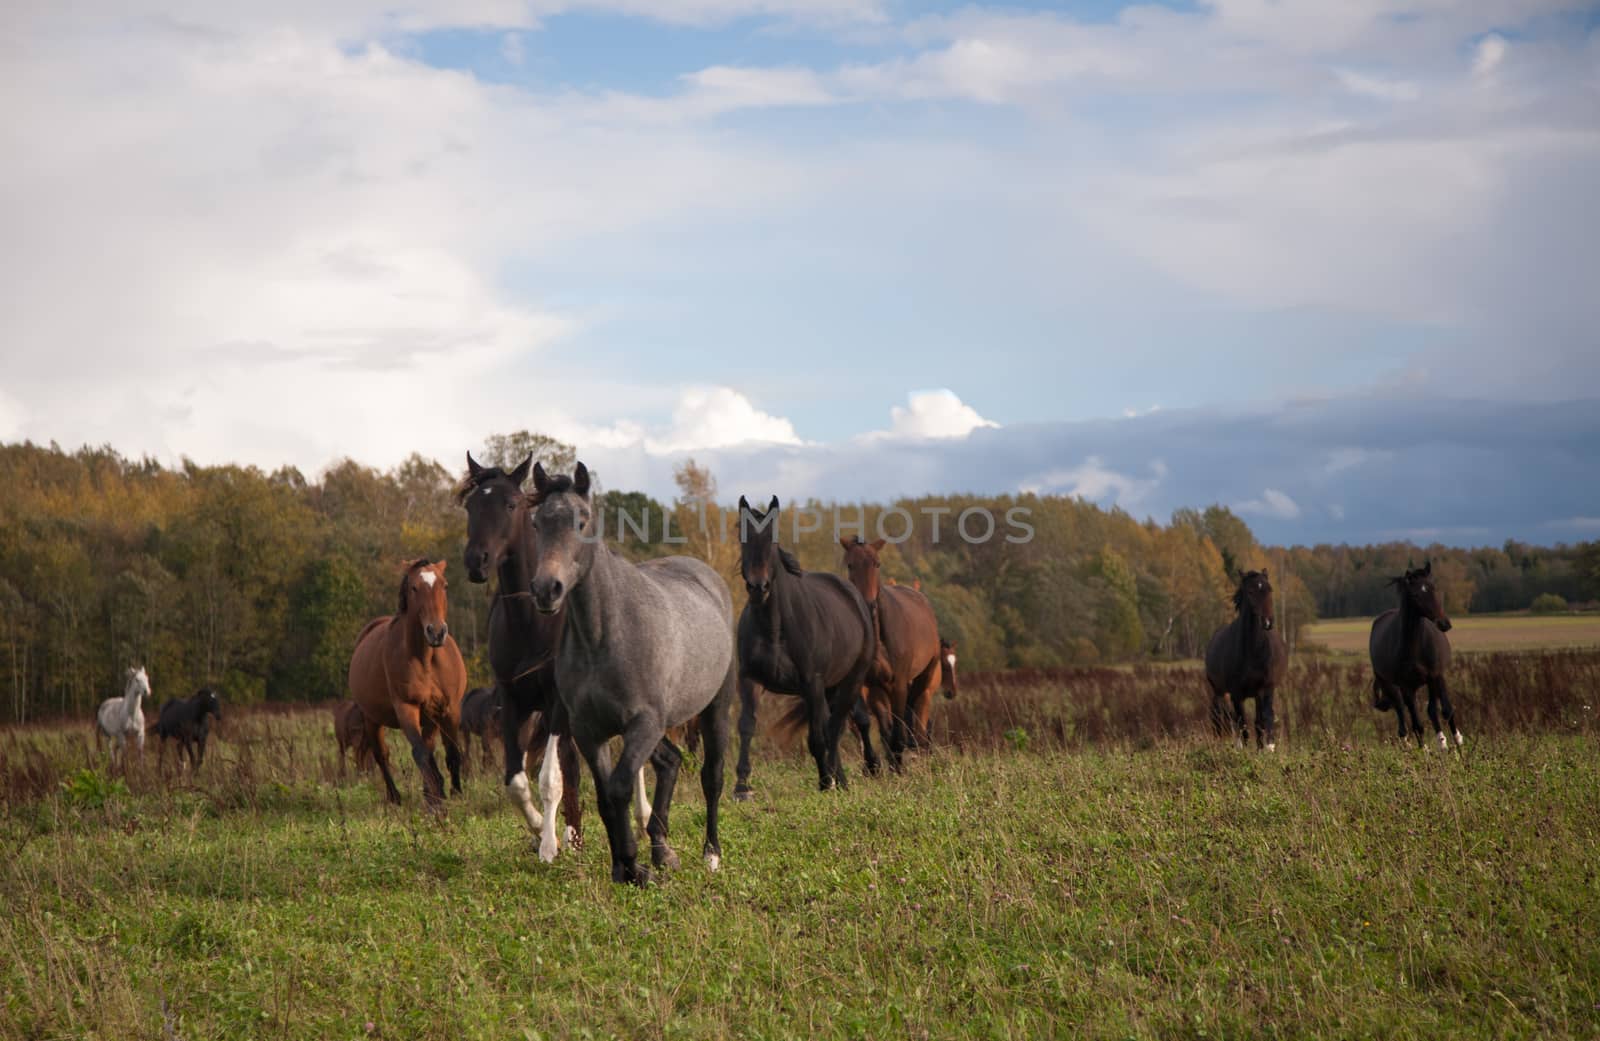 Horses in Field by desant7474